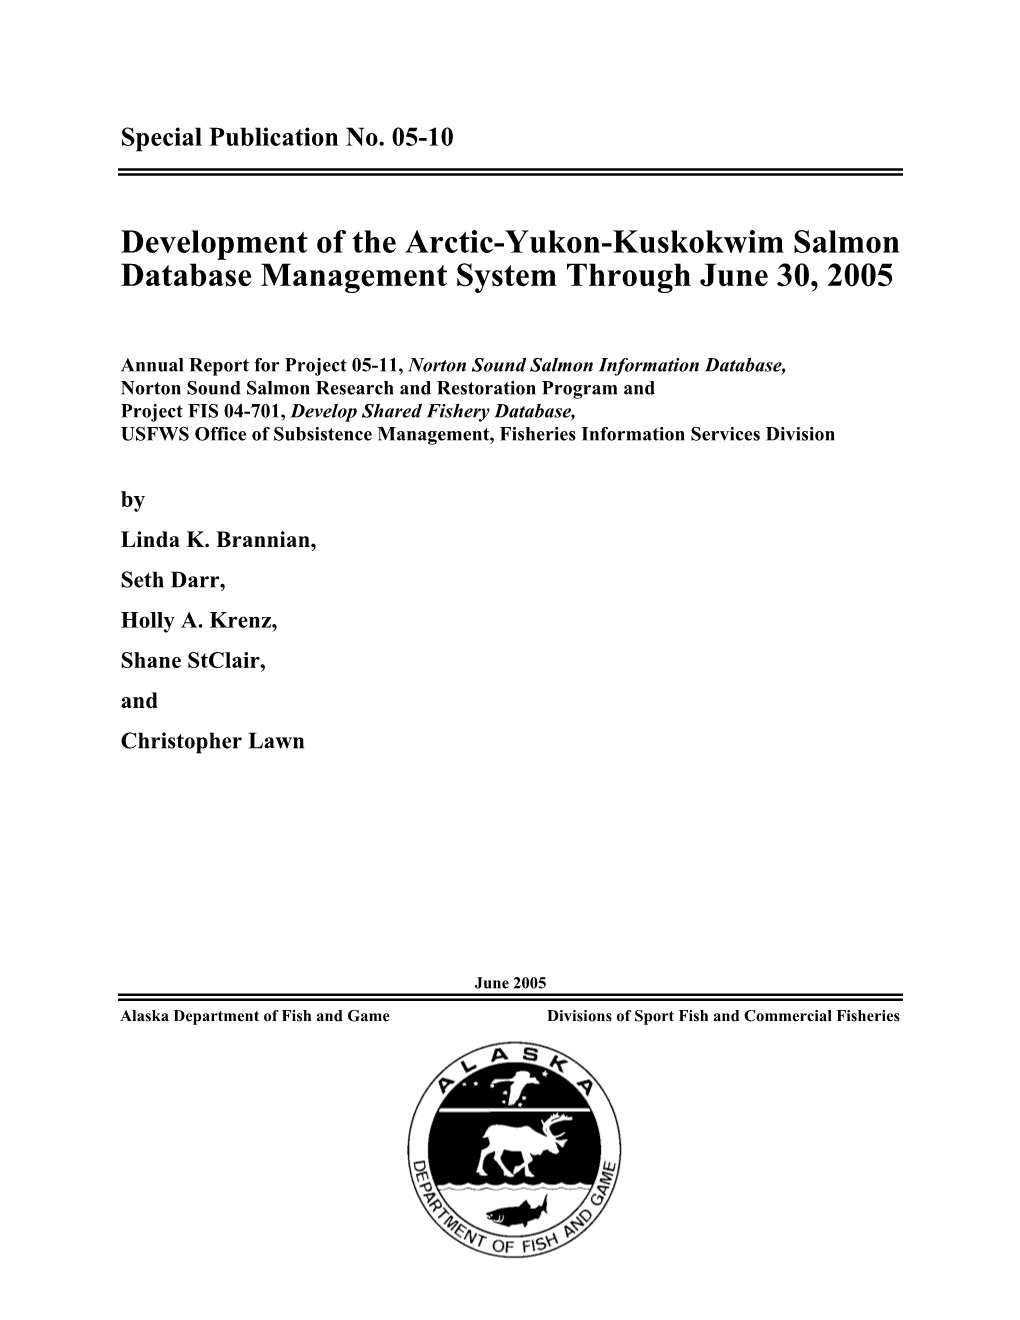 Development of the Arctic-Yukon-Kuskokwim Salmon Database Management System Through June 30, 2005